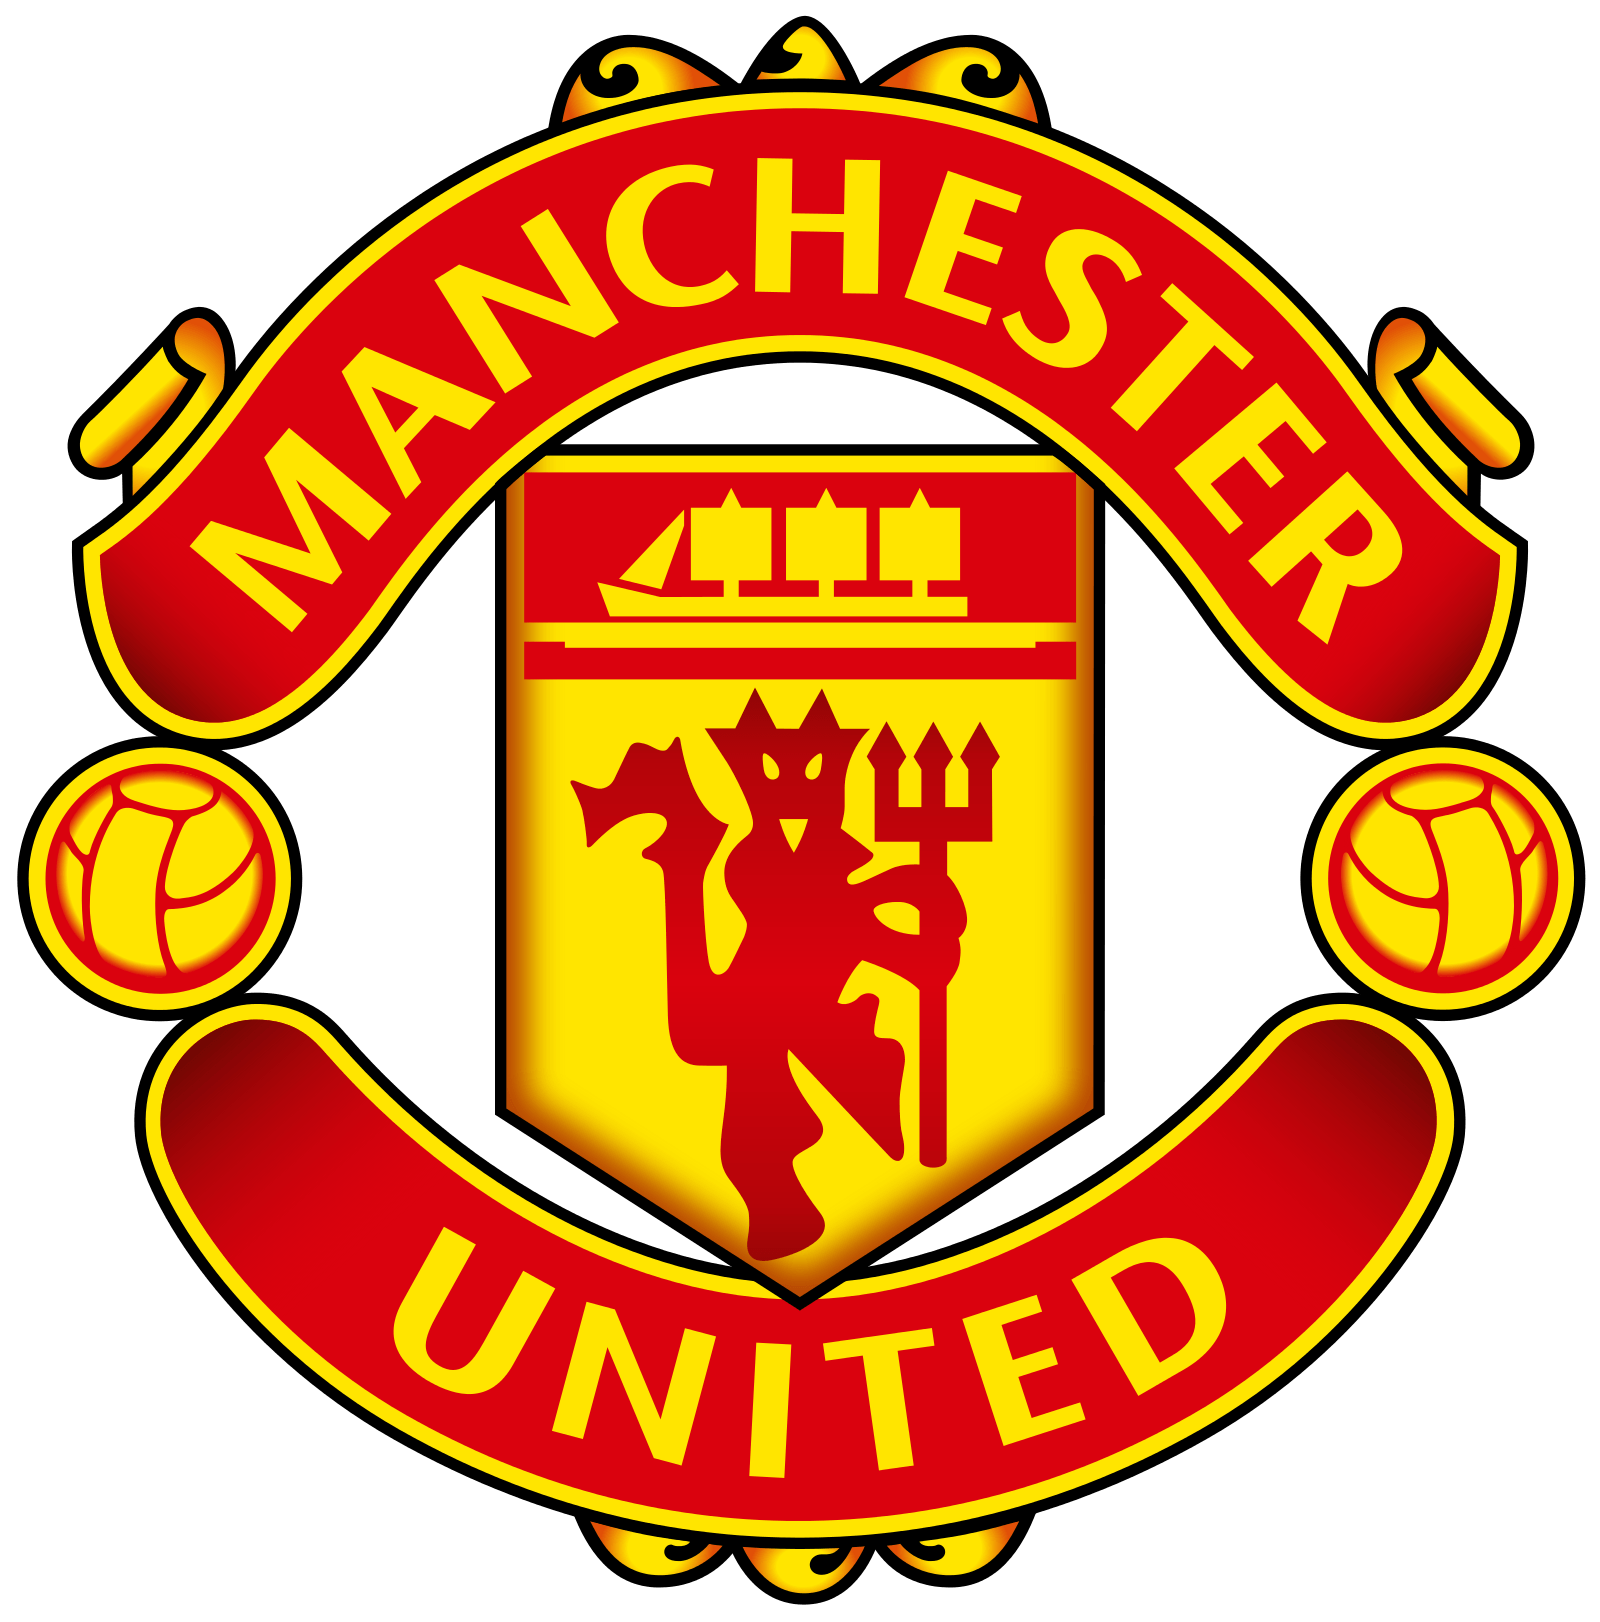 256X256 Logo - Manchester United PNG Transparent Manchester United.PNG Images ...